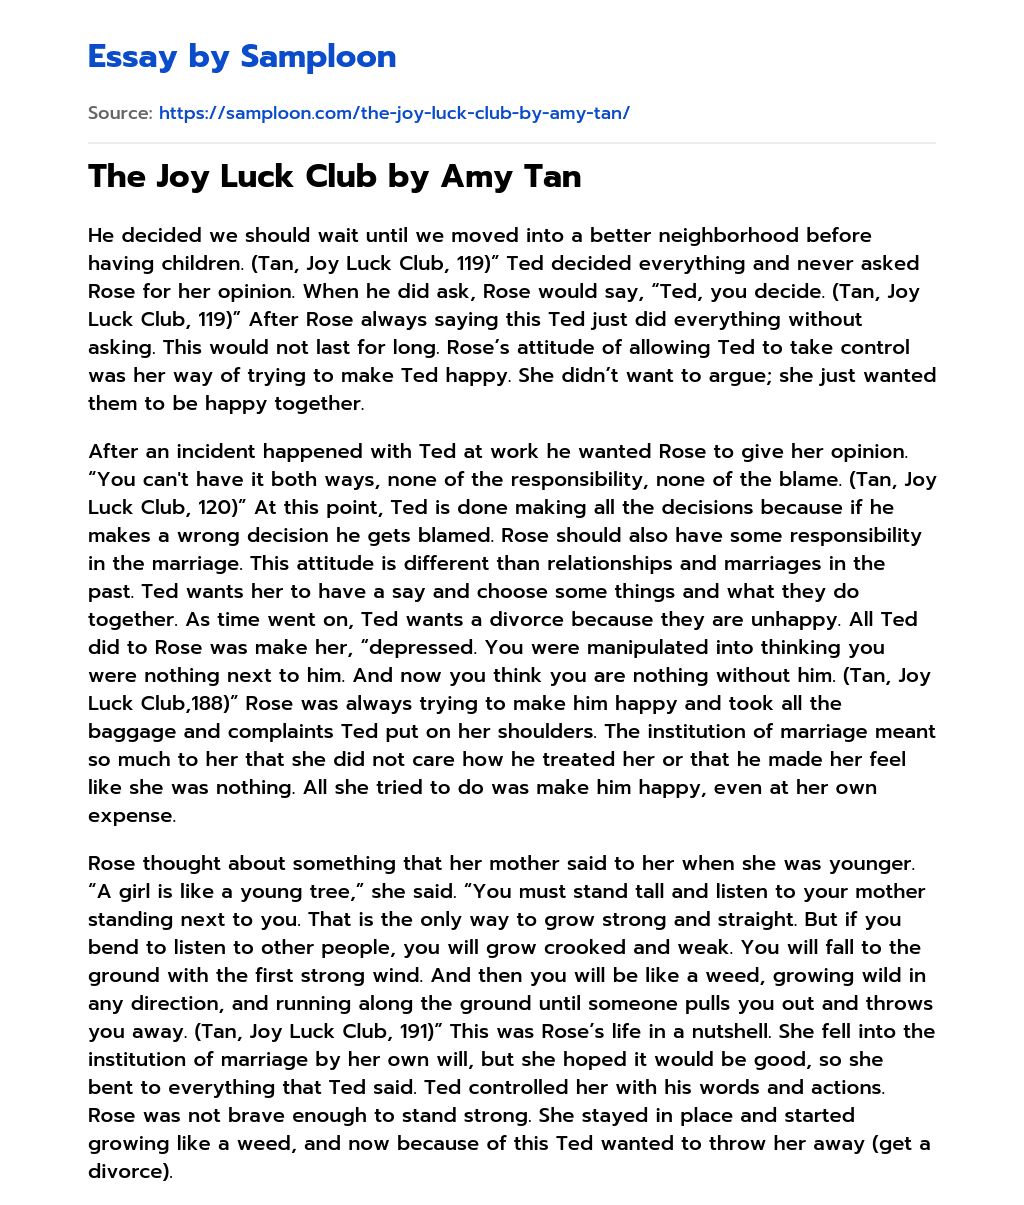 The Joy Luck Club by Amy Tan essay